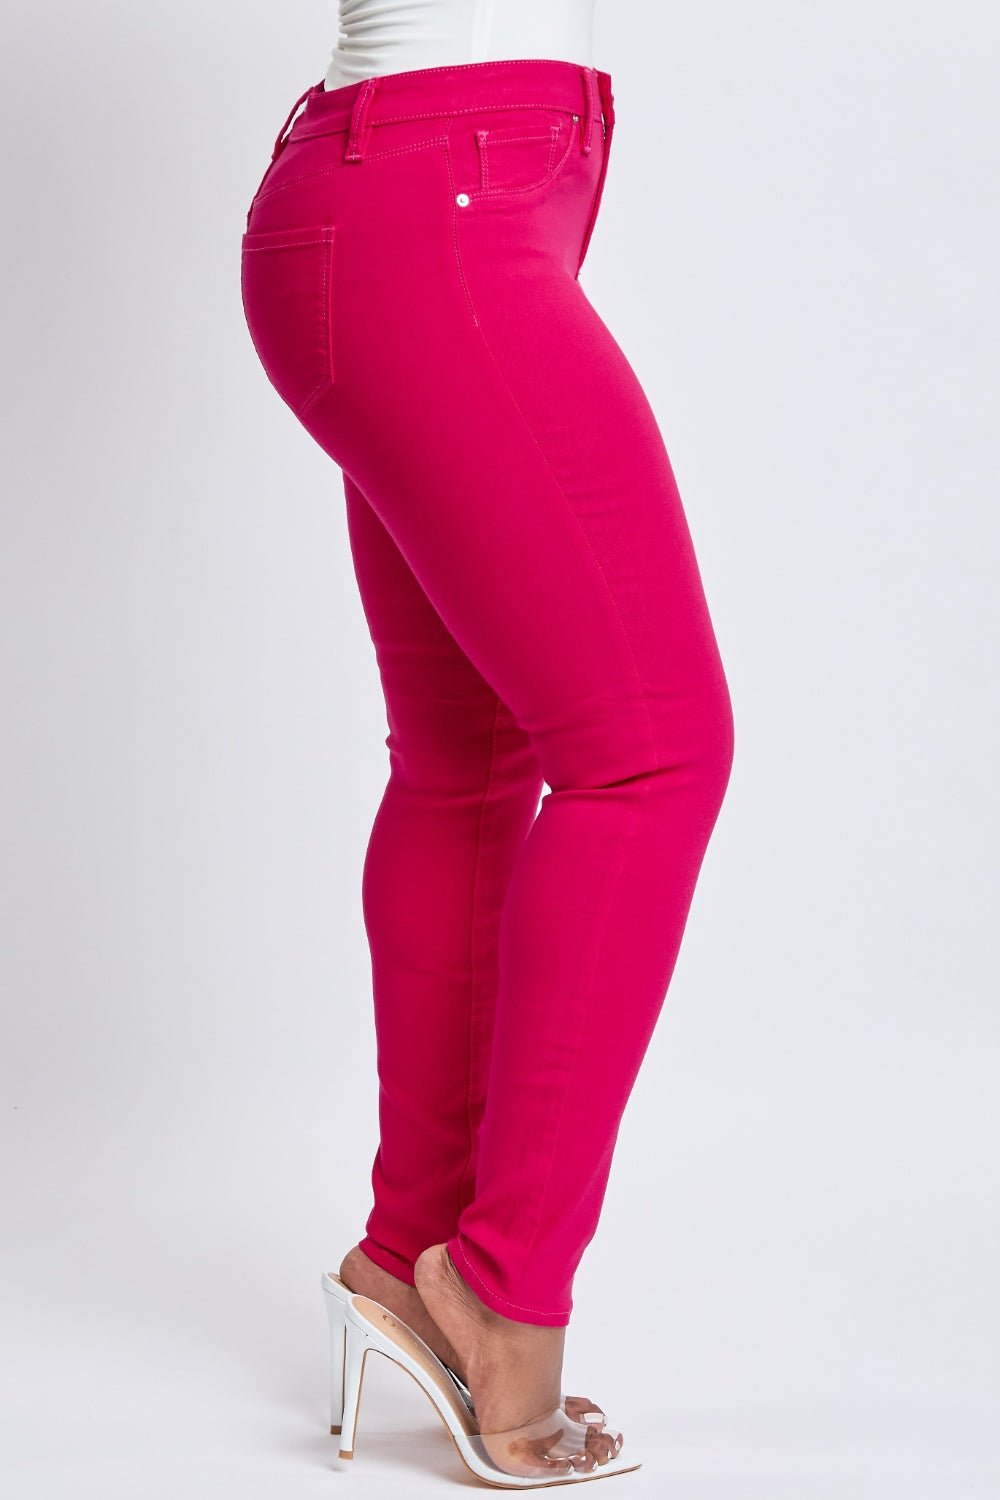 Hyperstretch Mid-Rise Skinny Jeans in Neon PinkJeansYMI Jeanswear